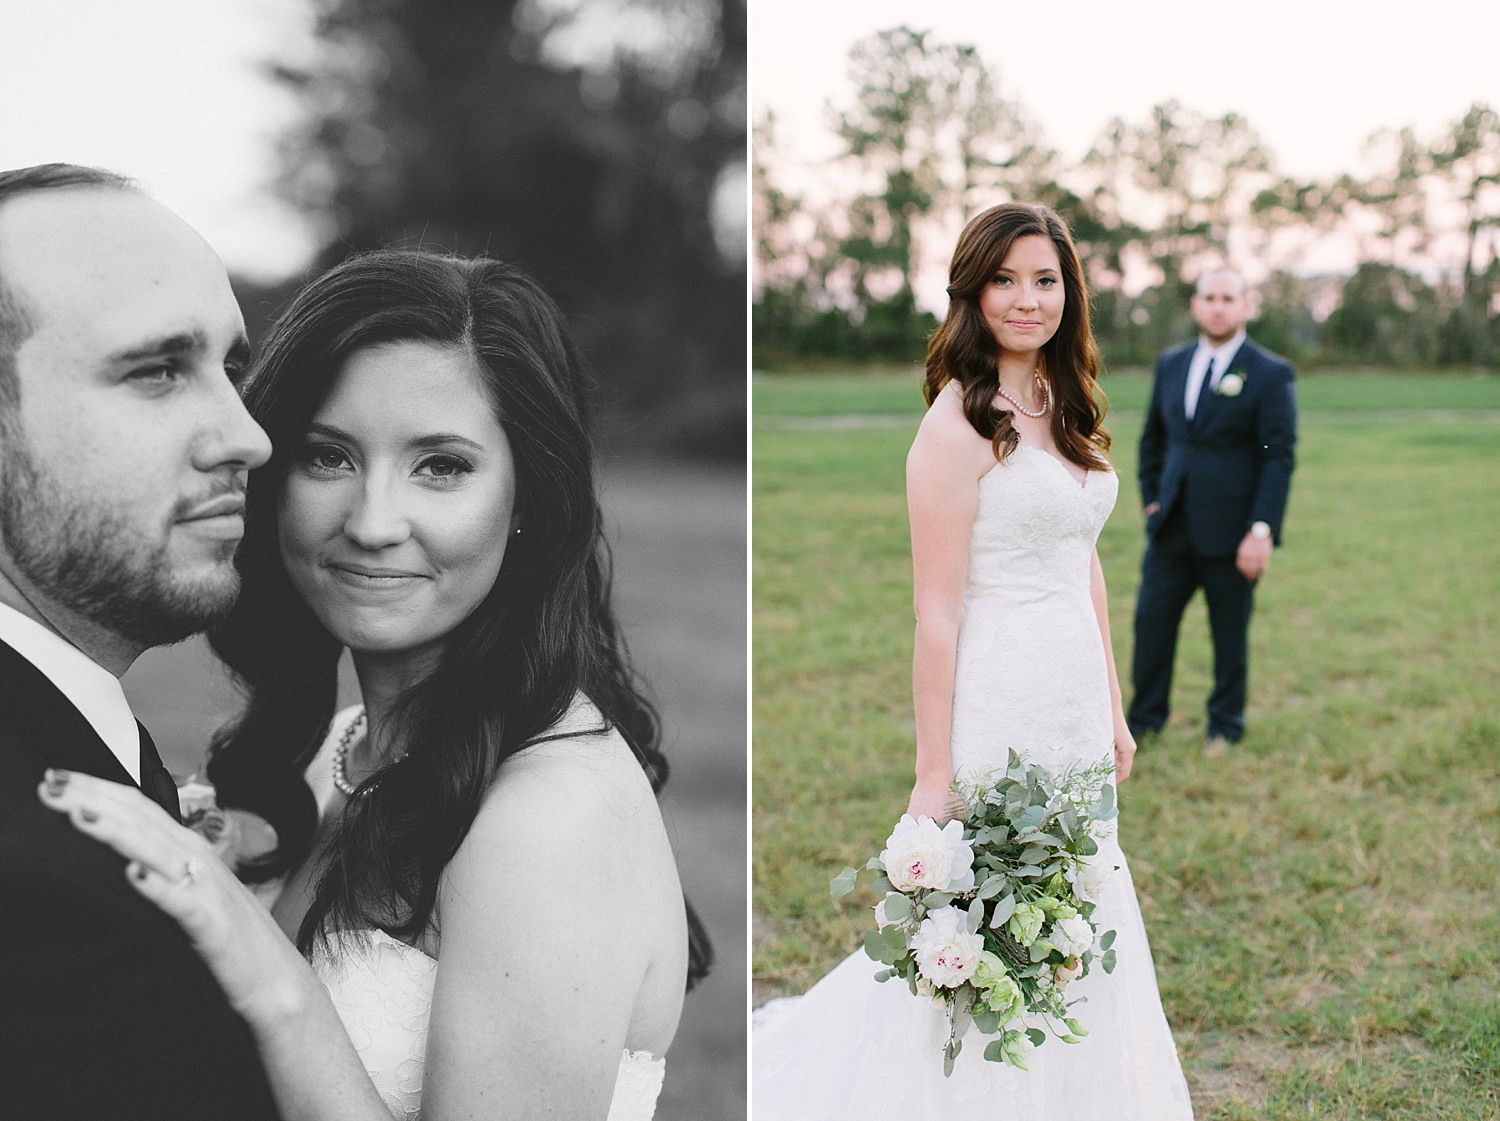 Bride Groom Portraits | Florida Rustic Barn Weddings | Plant City, Florida Wedding Photography | Benjamin Hewitt Photographer